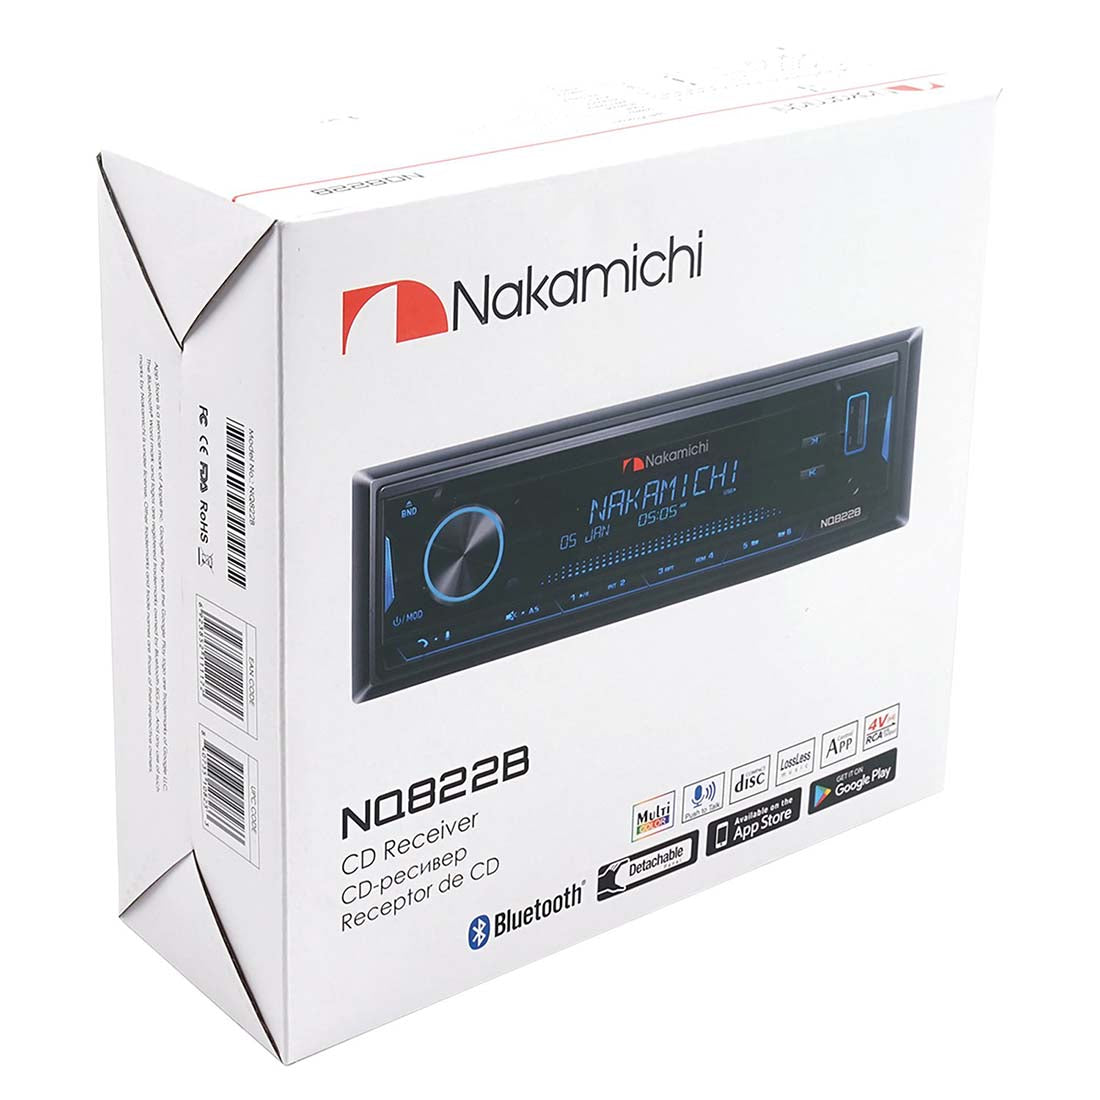 Nakamichi NQ822B 1-DIN CD/MP3/USB Car Stereo In-Dash Receiver w/ Bluetooth